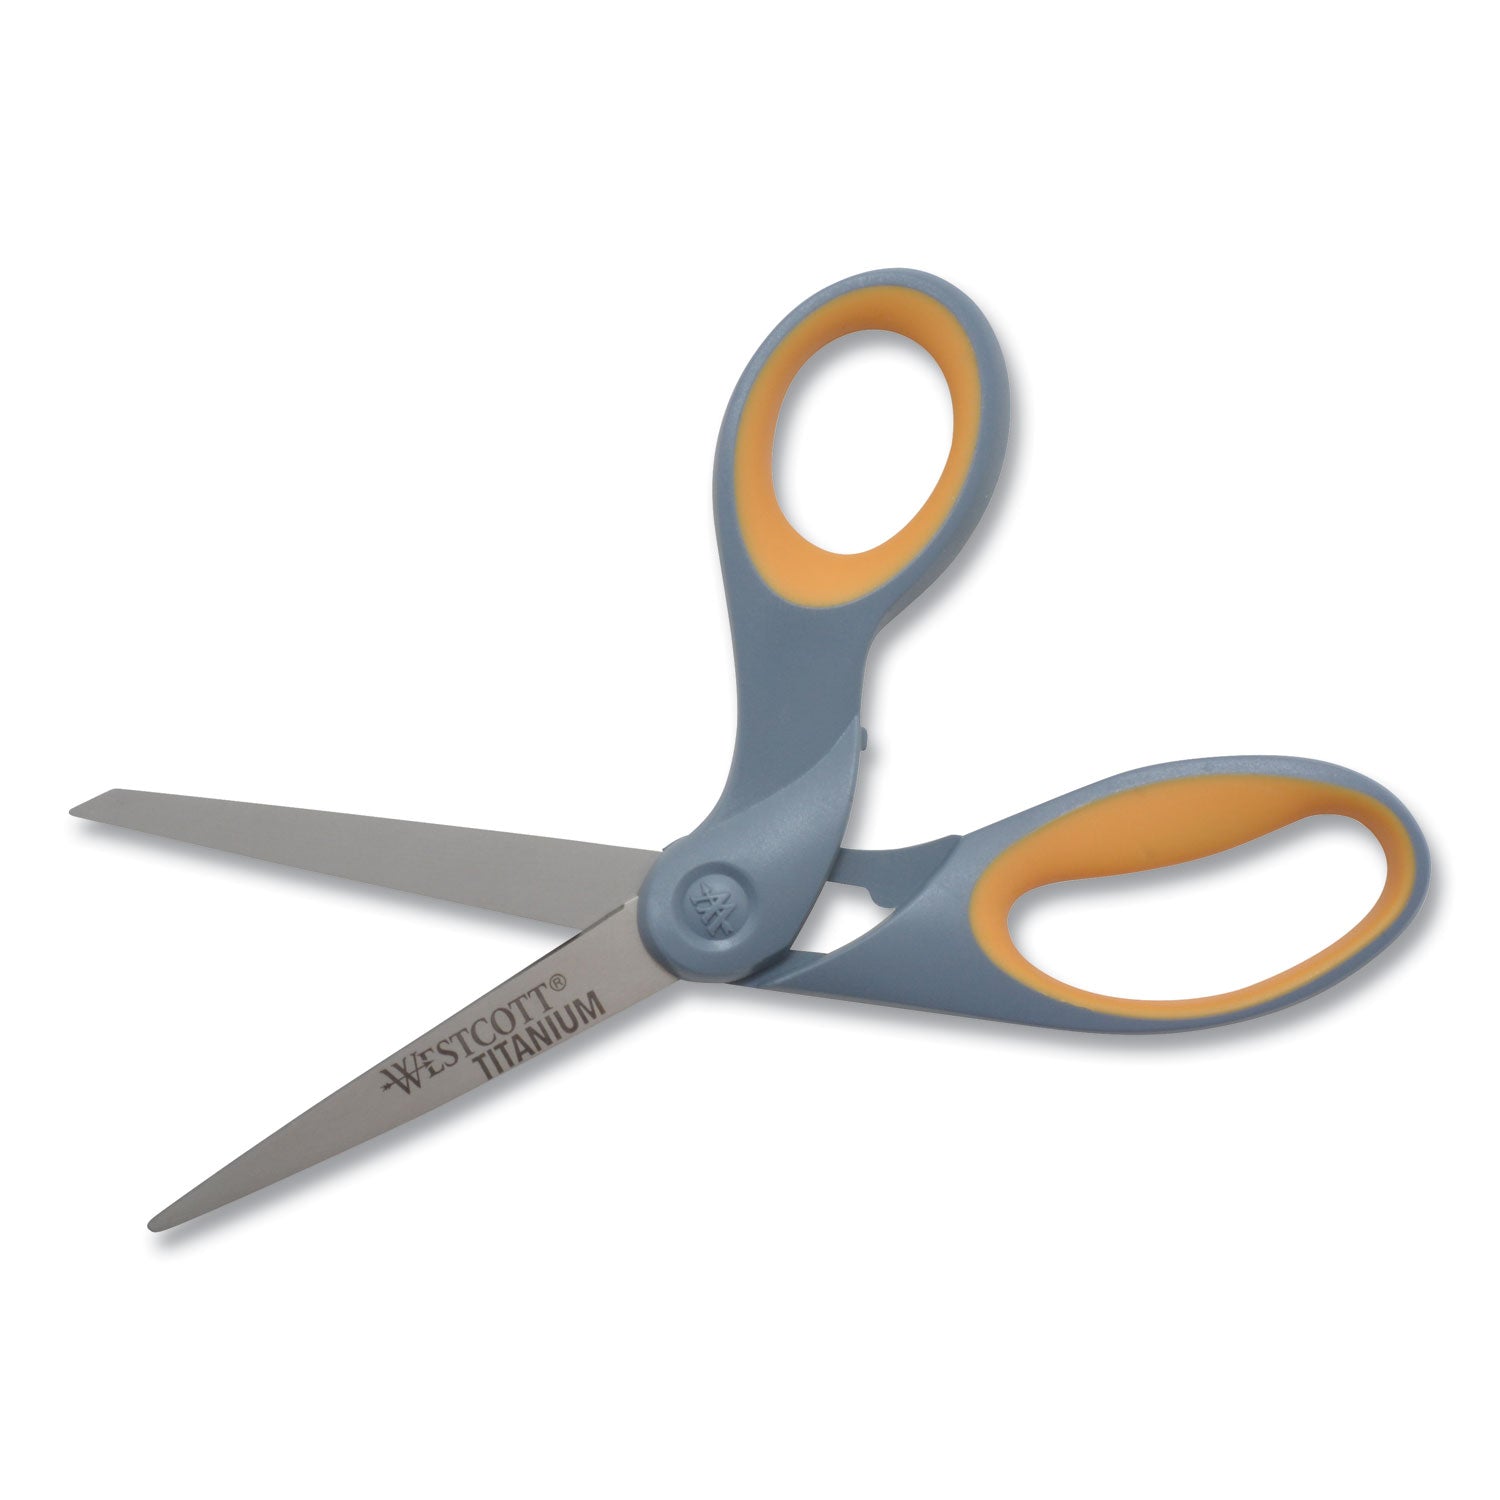 Titanium Bonded Scissors, 8" Long, 3.5" Cut Length, Gray/Yellow Offset Handle - 